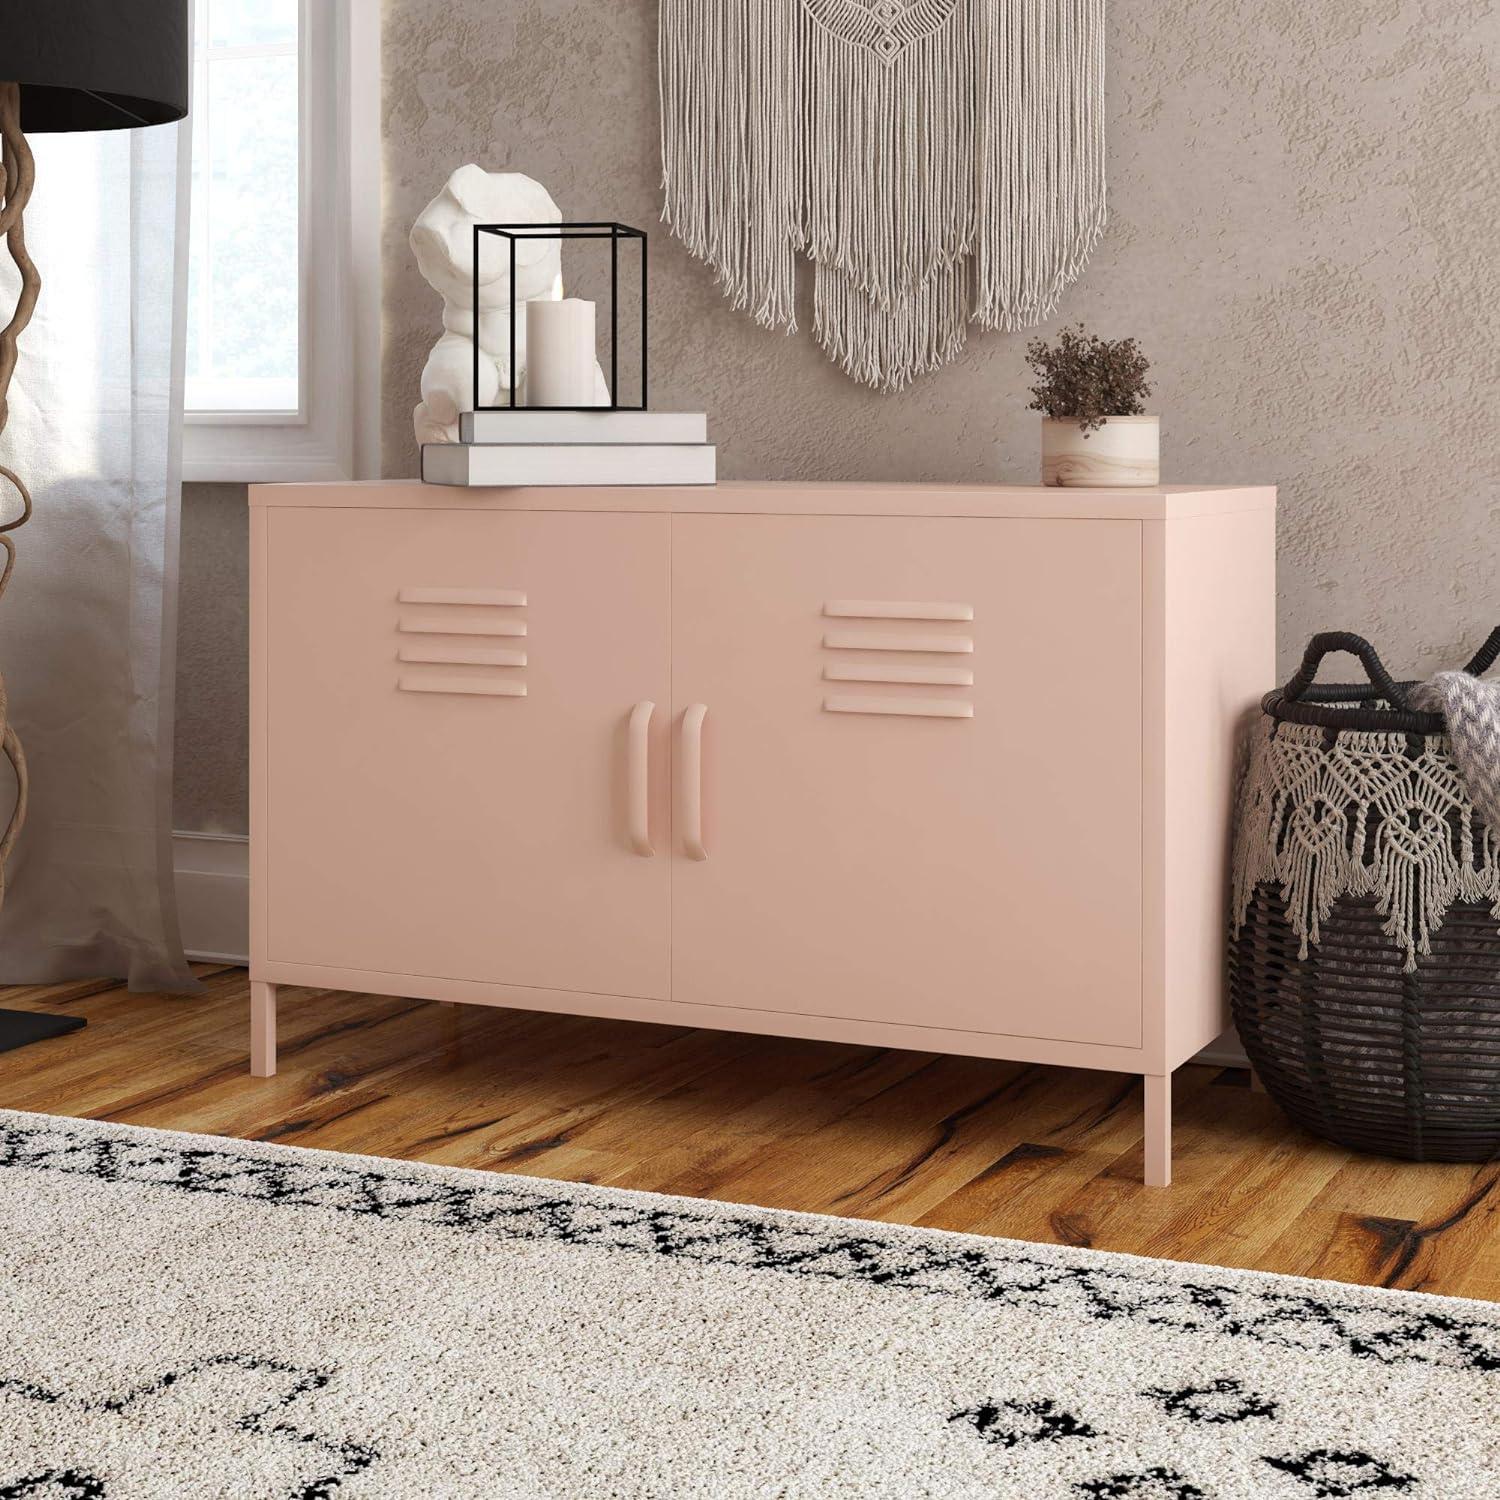 Shadwick Pink 44" Metal Locker Style Storage Cabinet